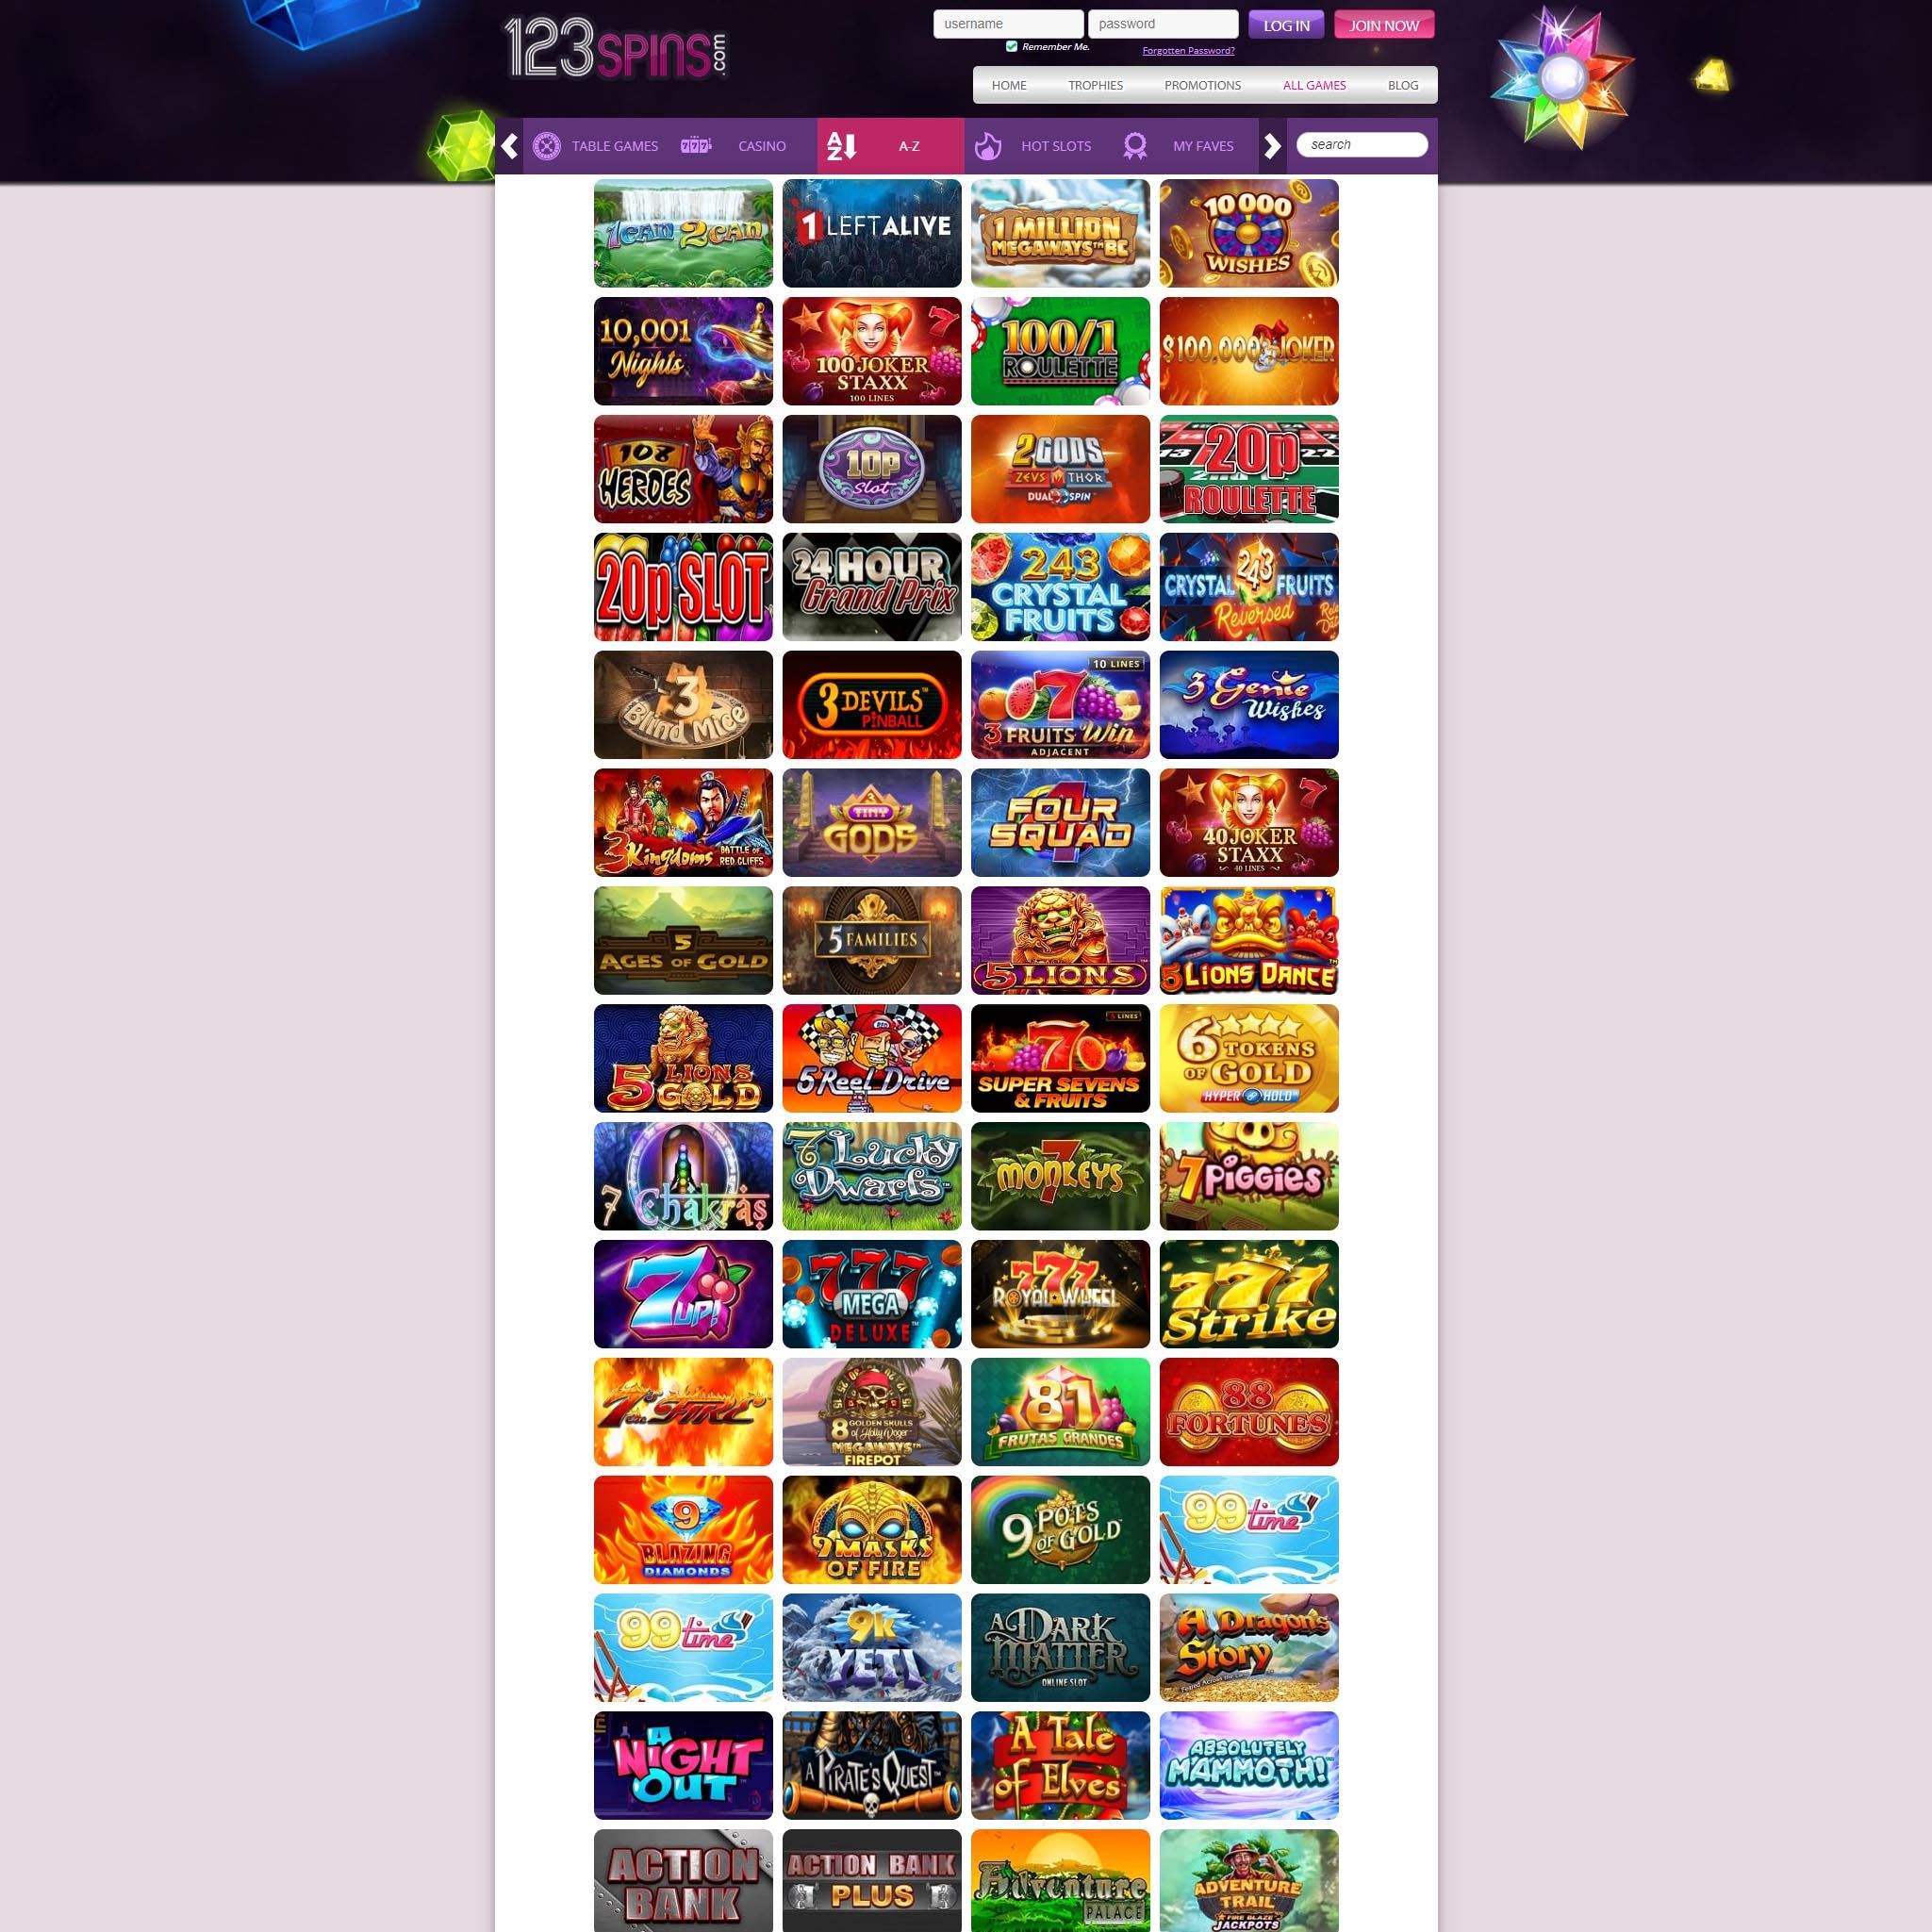 123spins Casino full games catalogue